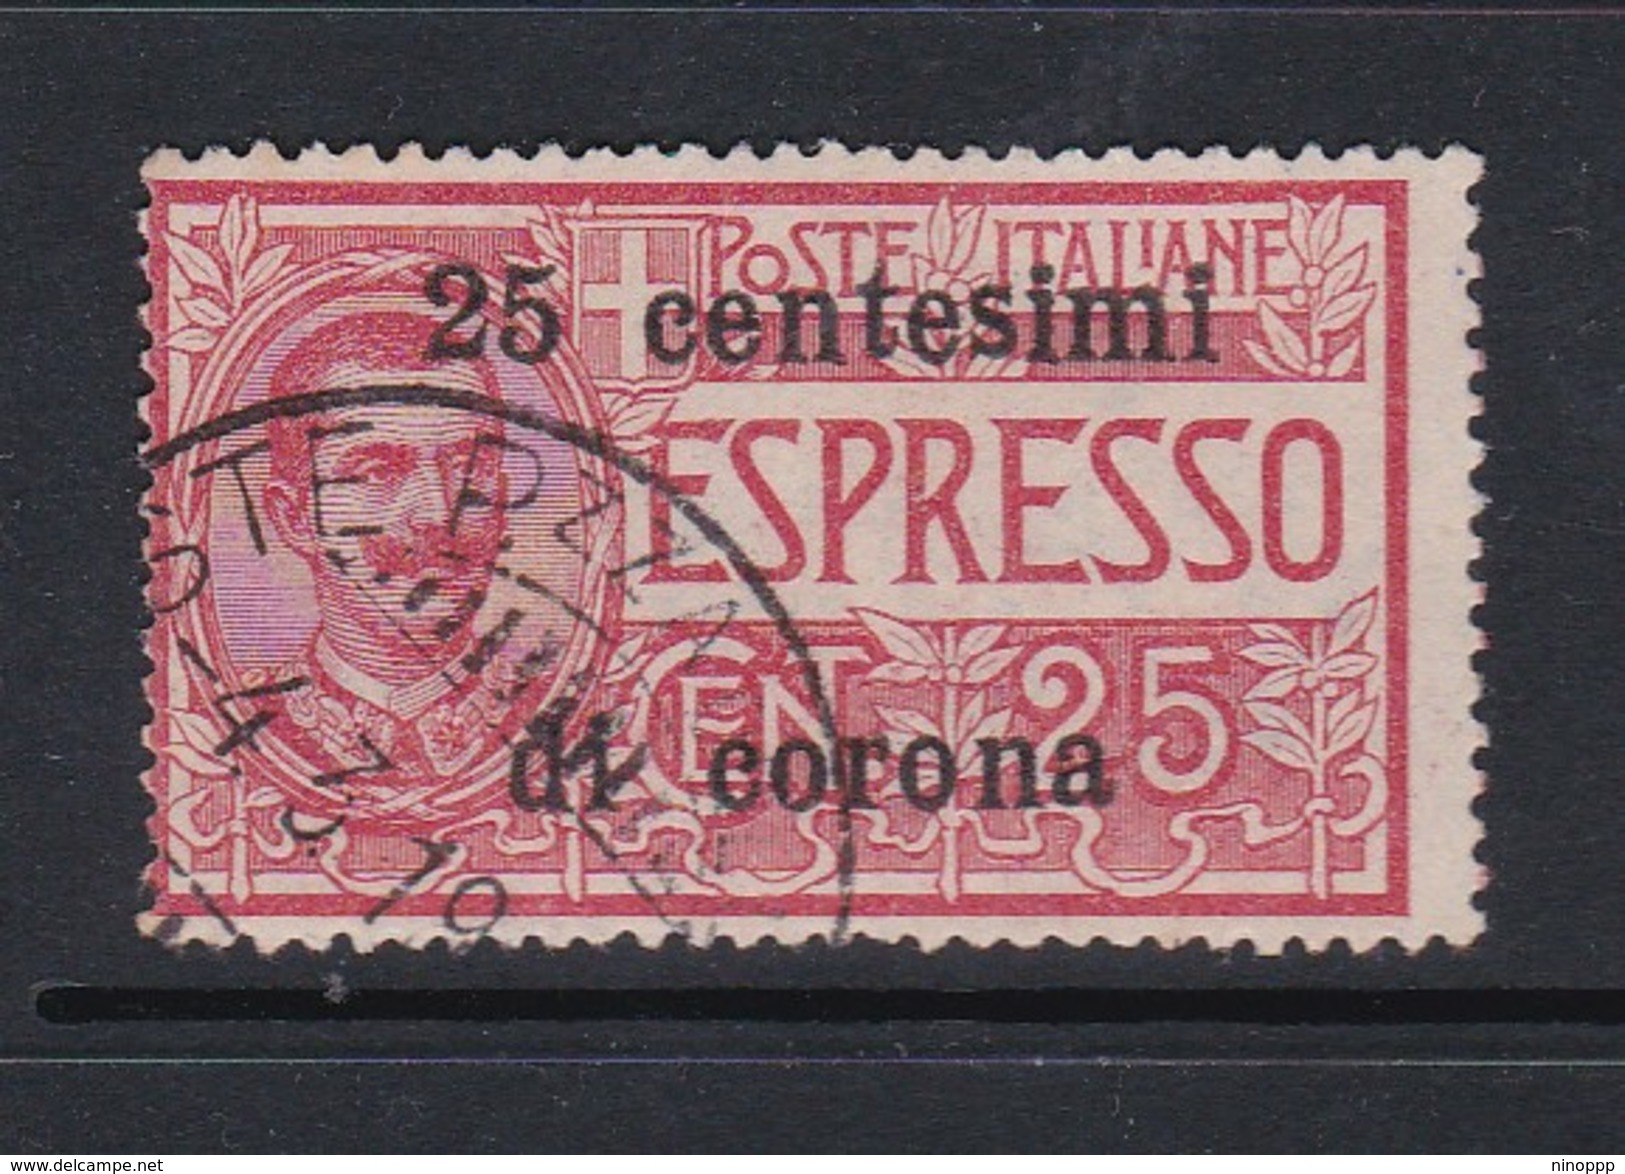 Venezia Giulia NE2 1919 Italian Stamps Overprinted 25c On 25c Rose Used - Austrian Occupation